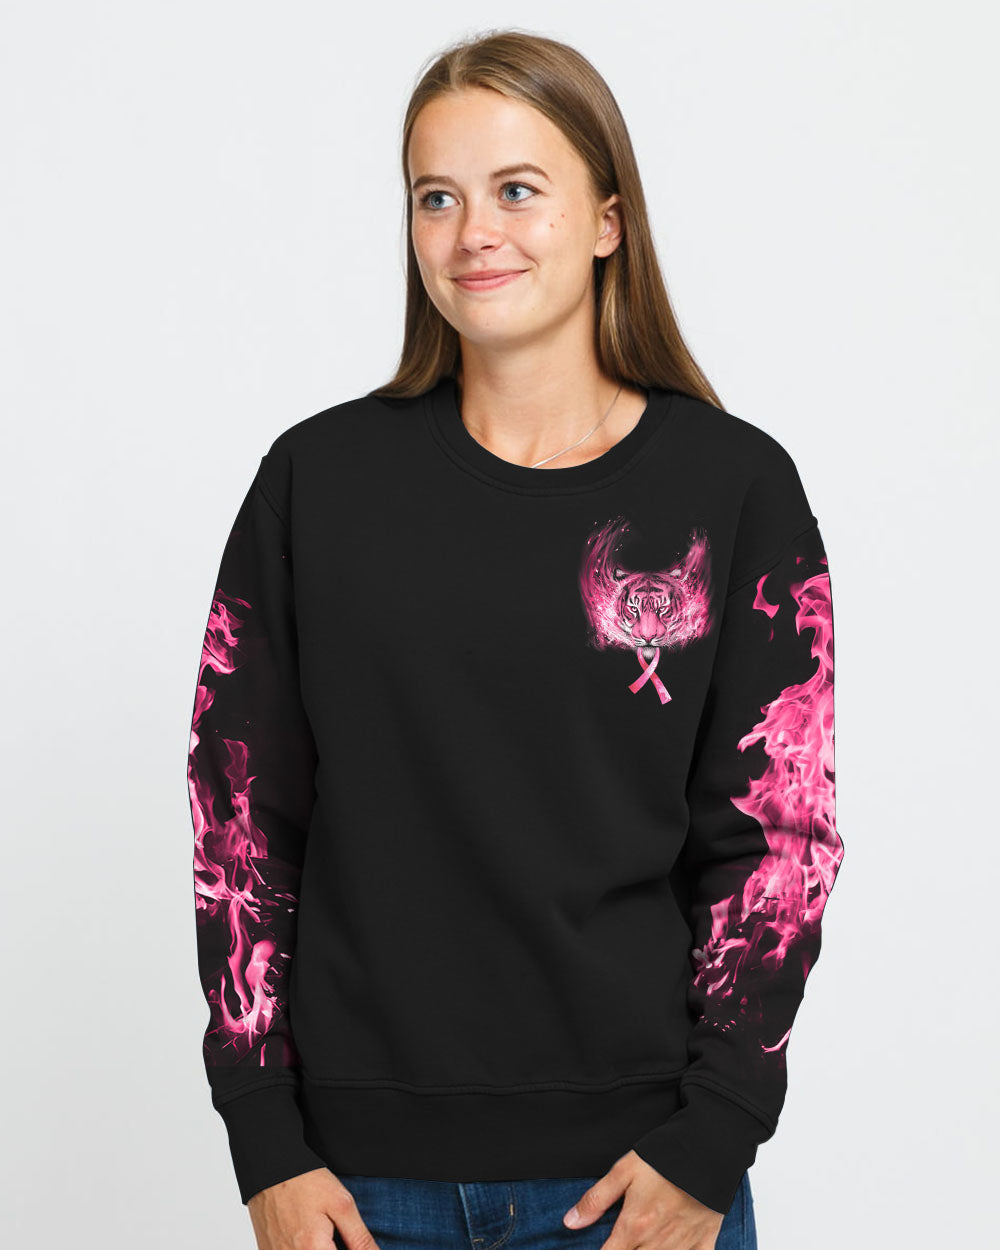 Fire Tiger Women's Breast Cancer Awareness Sweatshirt